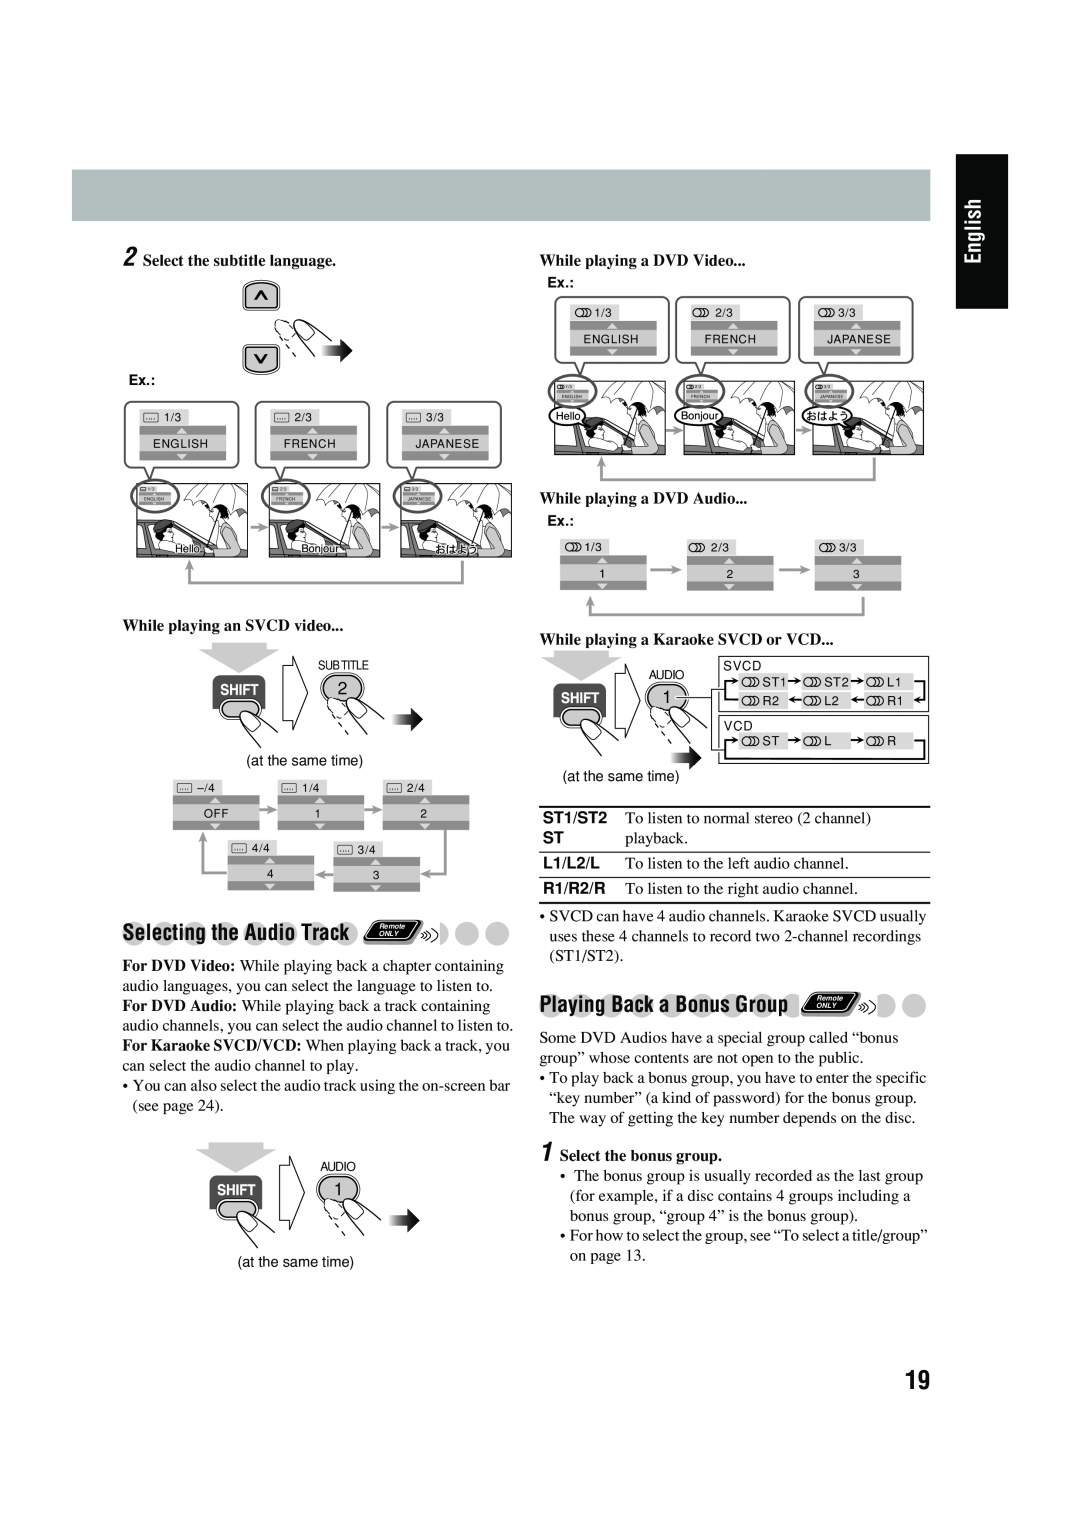 JVC UX-P450 manual Playing Back a Bonus Group, Selecting the Audio Track, English, Select the subtitle language 